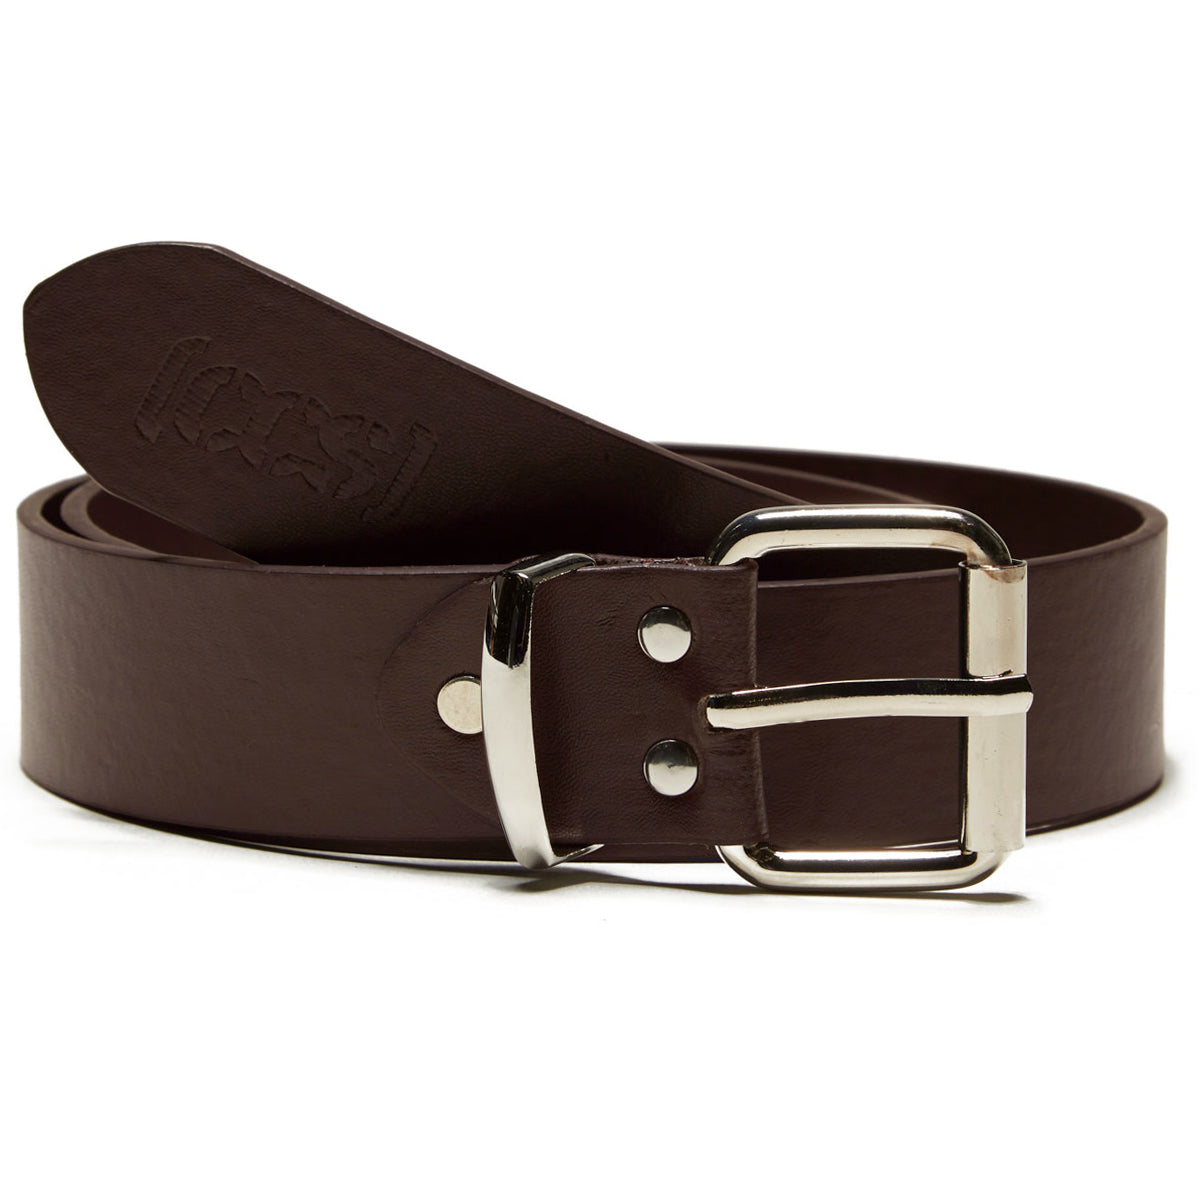 CCS Vegan Leather Belt - Brown image 1